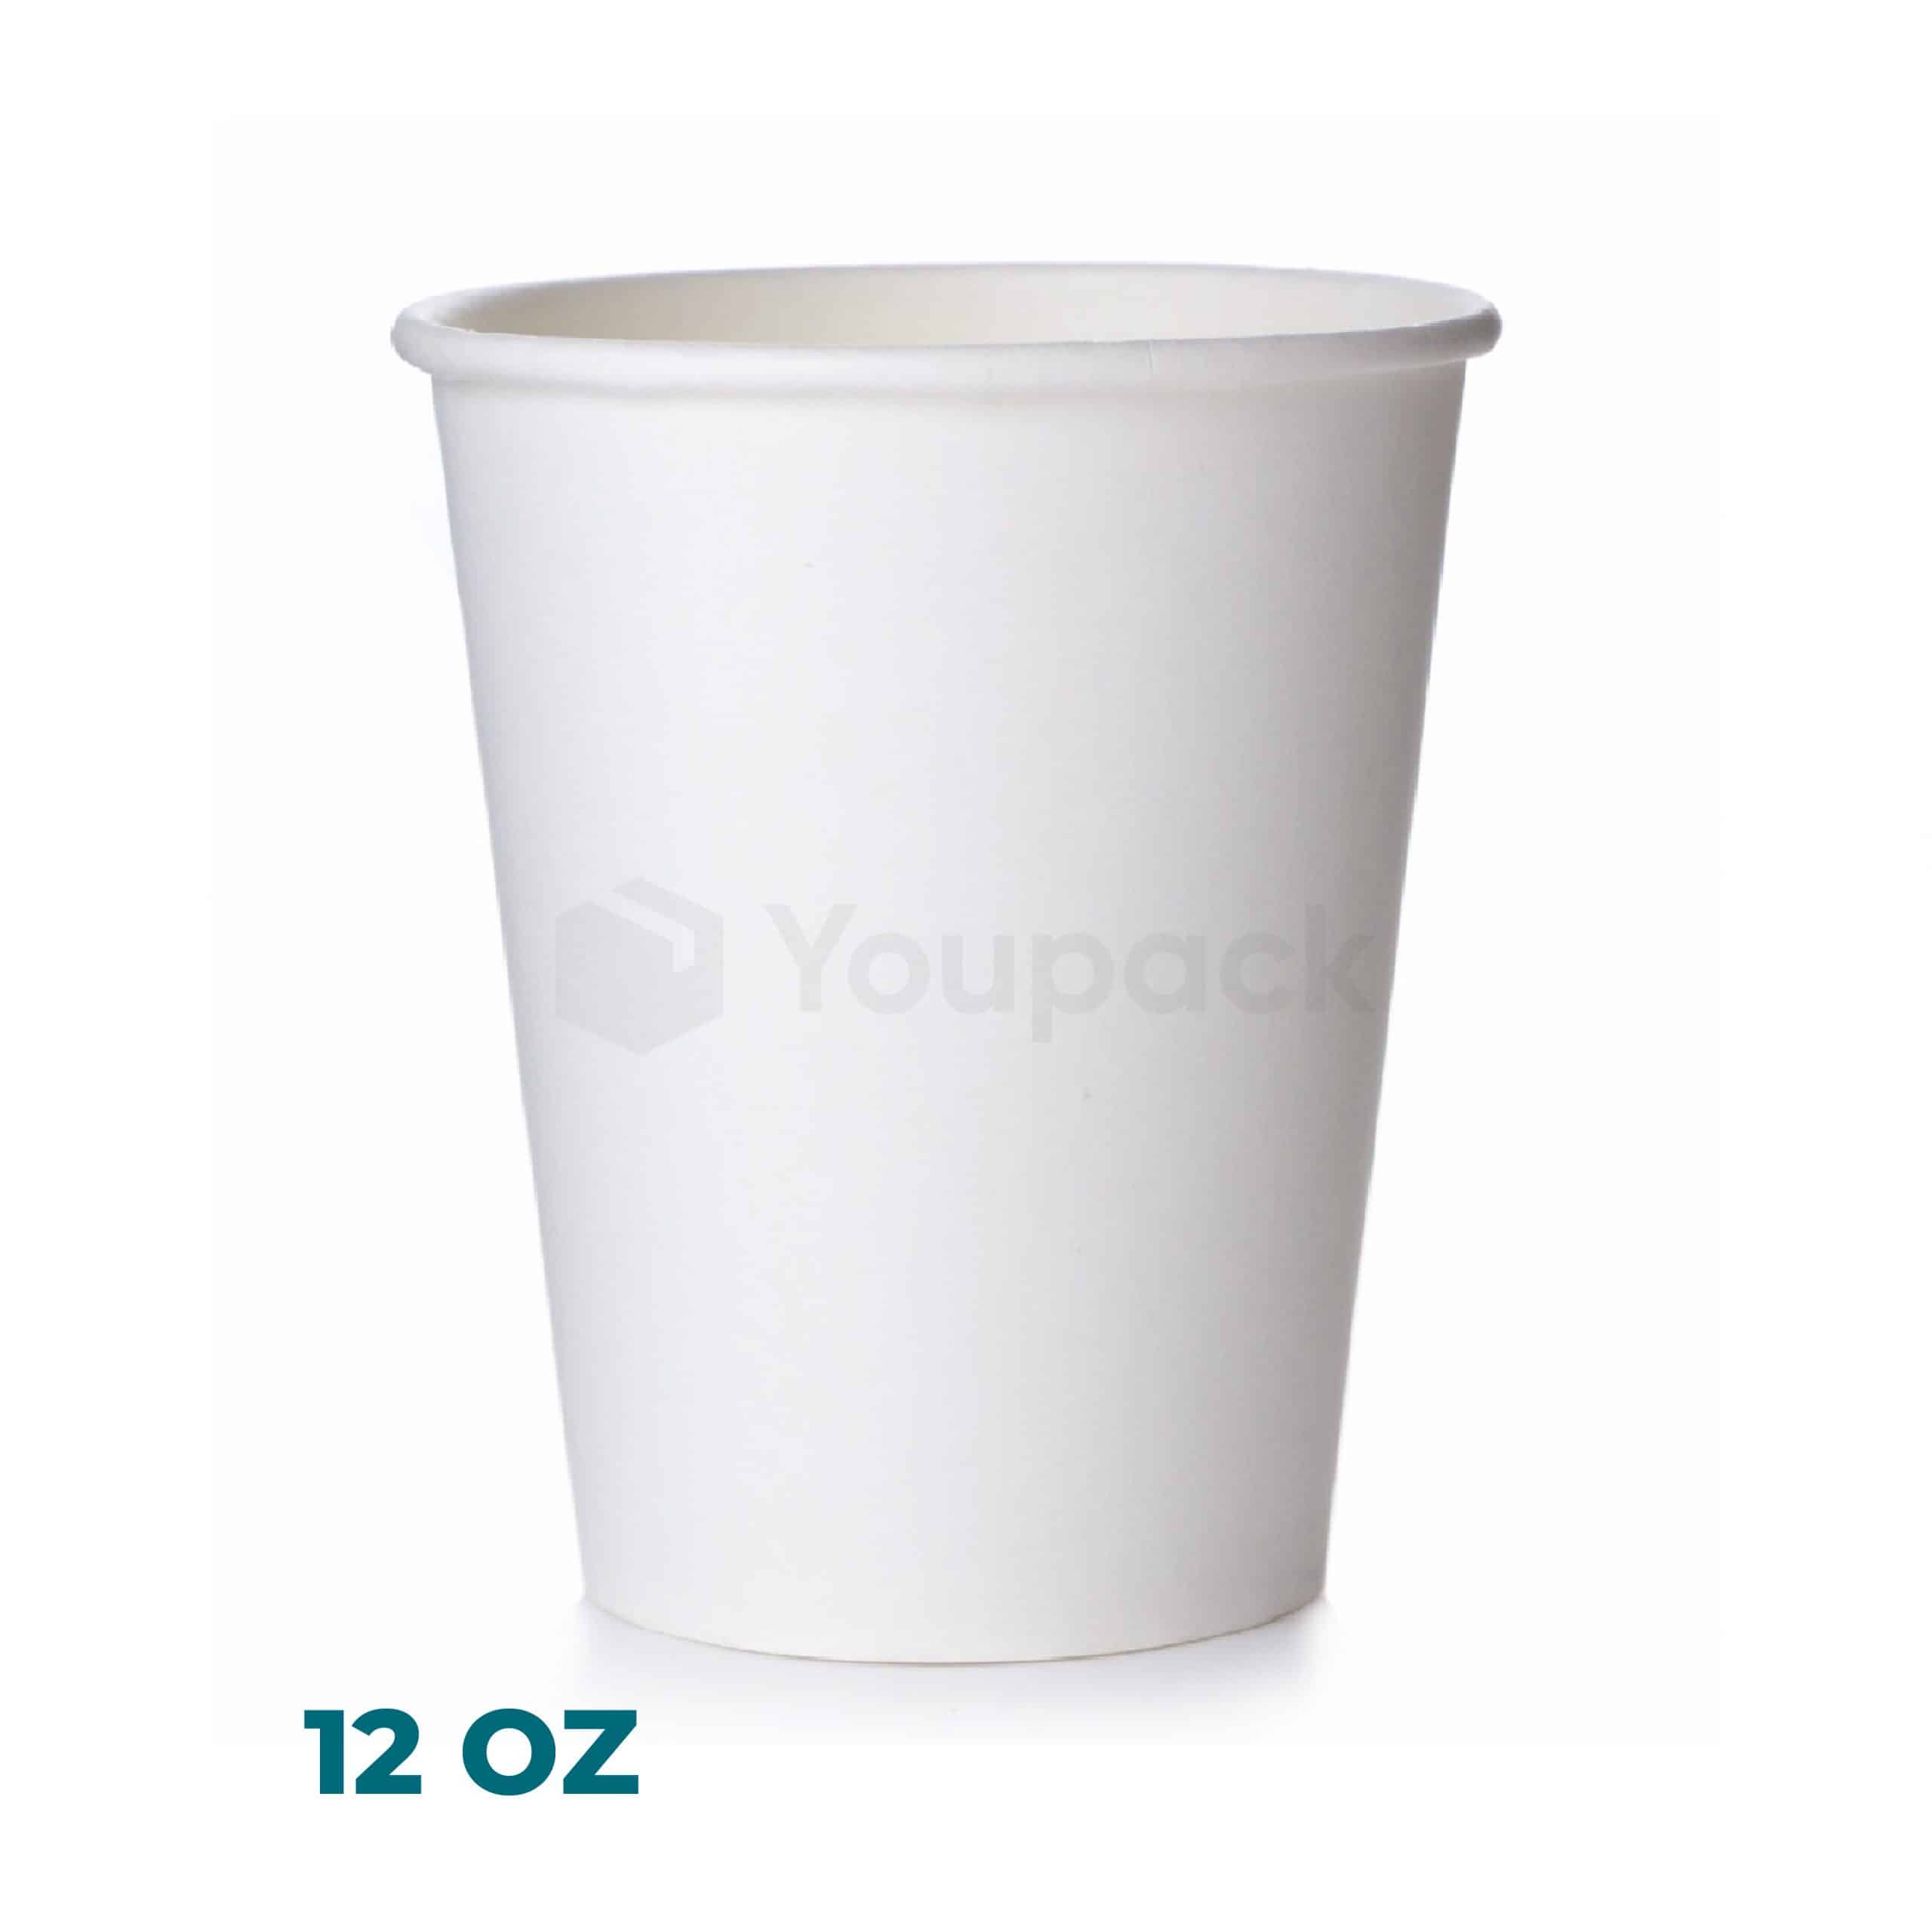 Gobelet carton blanc 25/30 cl - 12 oz, Emballages Ecologiques